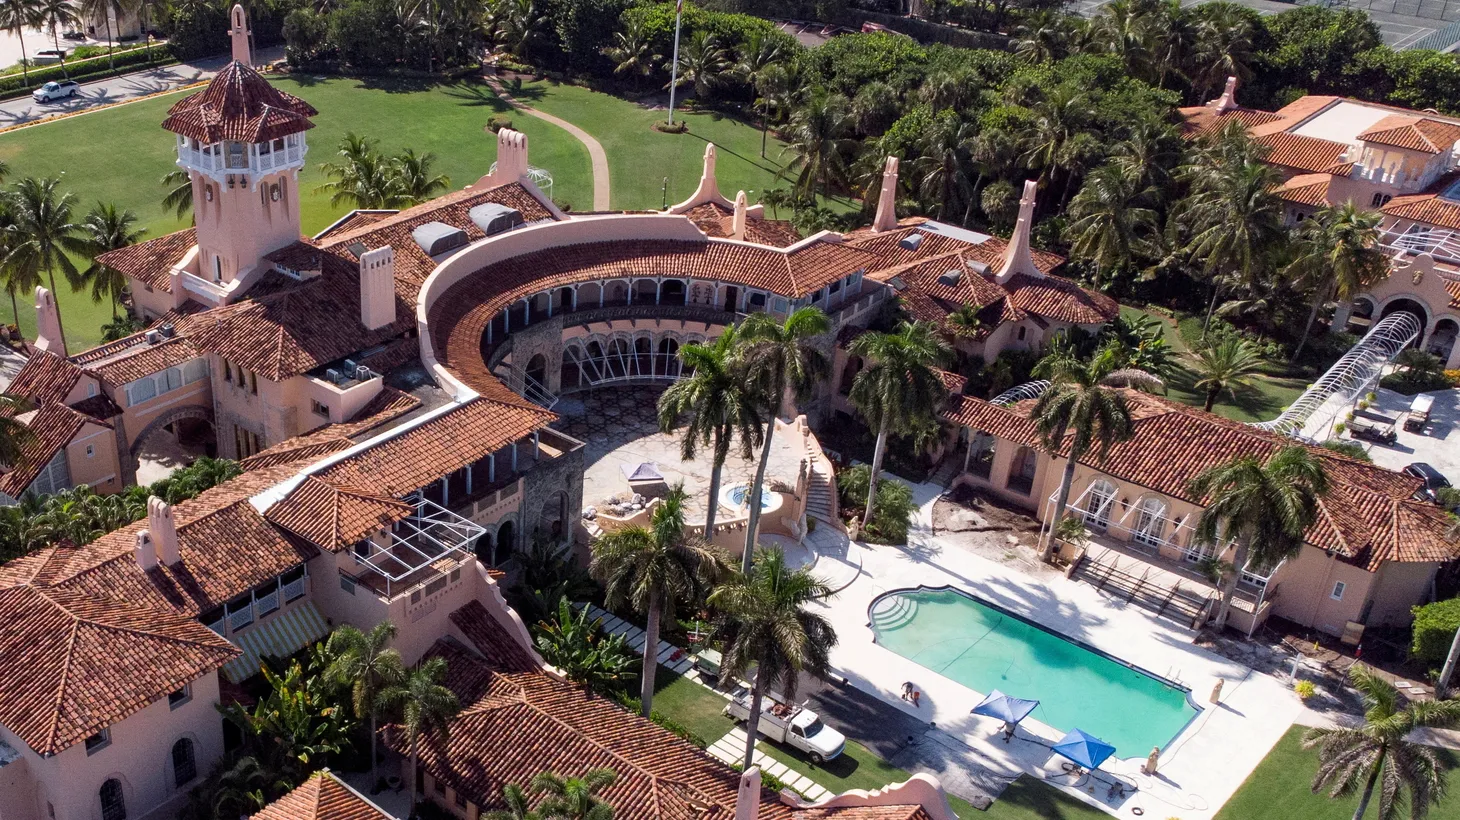 An aerial view shows former U.S. President Donald Trump's Mar-a-Lago home in Palm Beach, Florida, U.S. August 15, 2022.